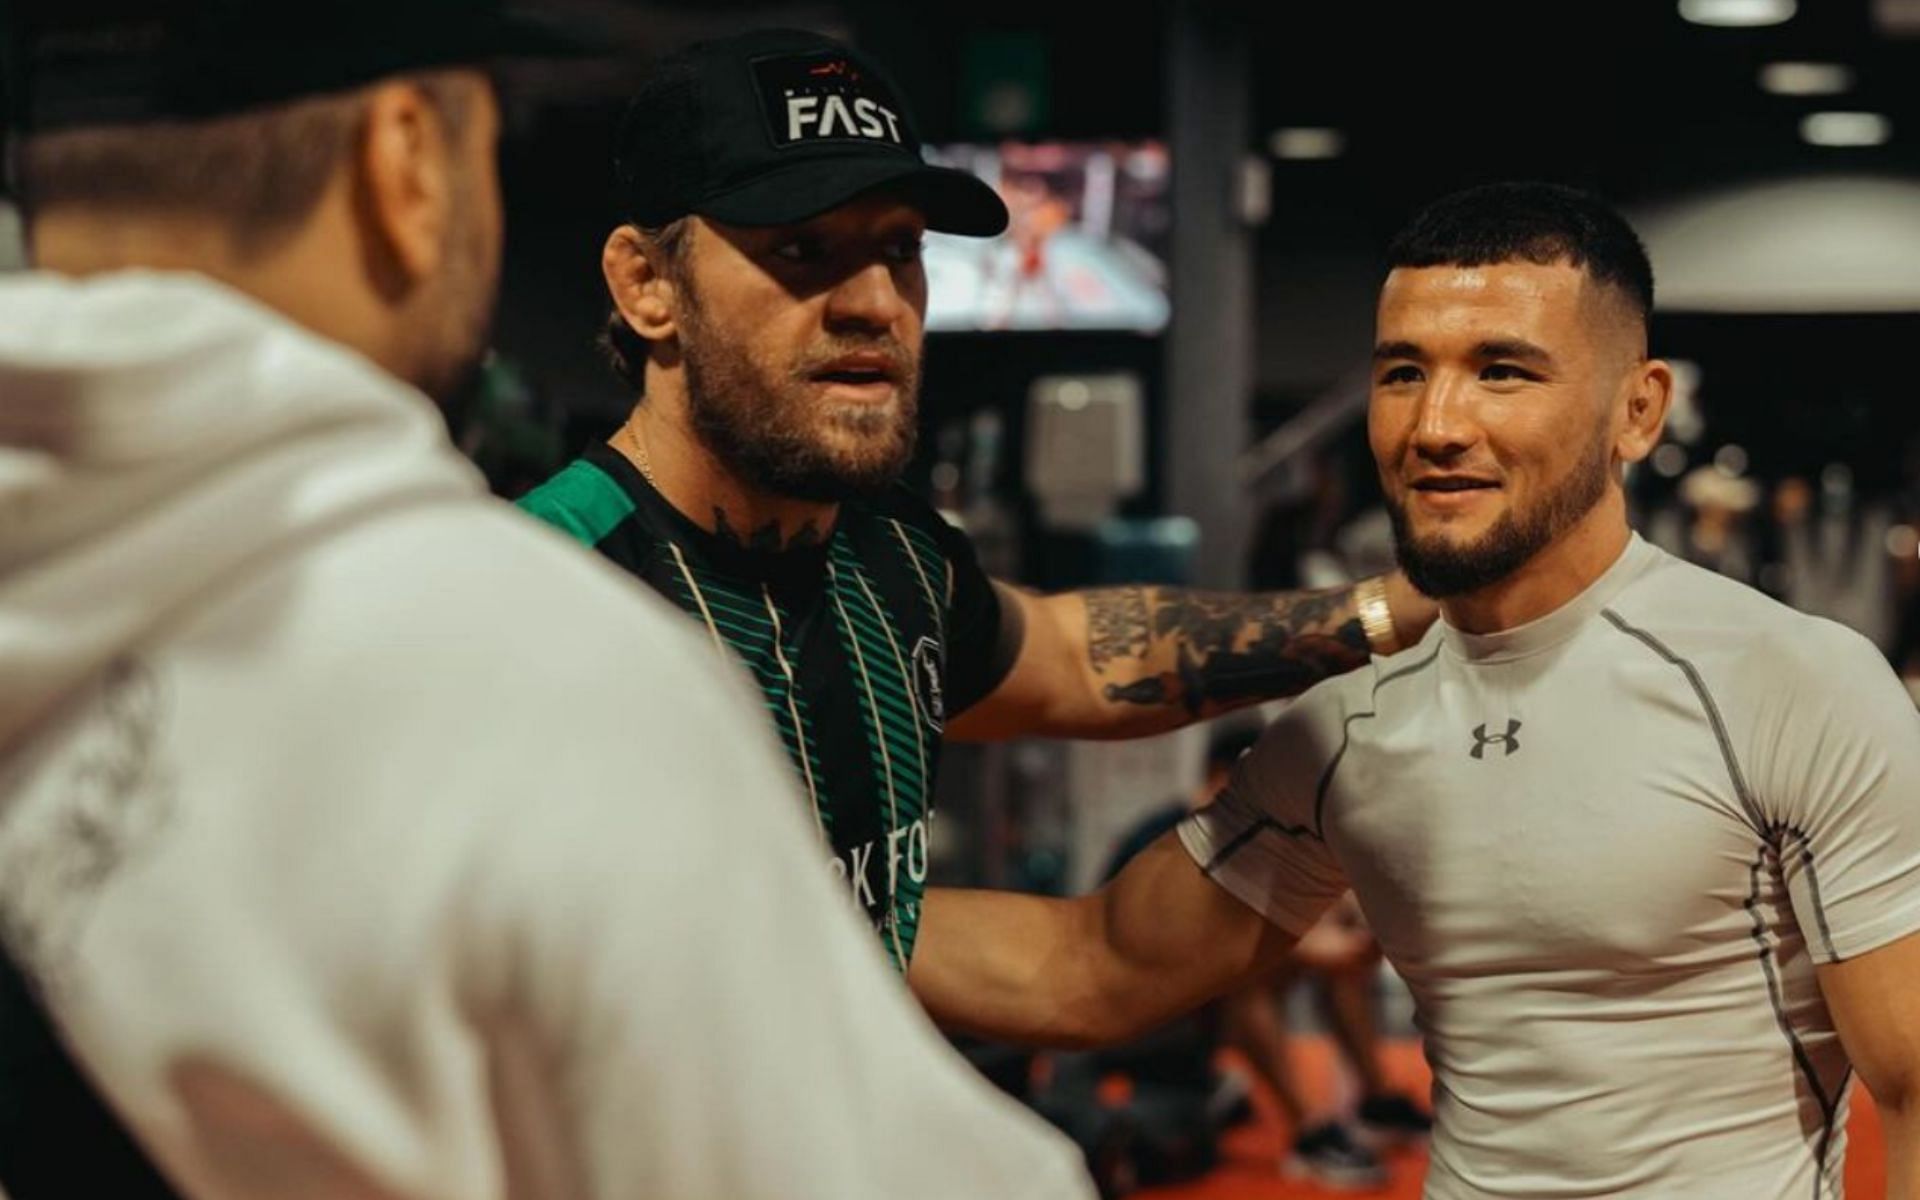 Conor McGregor and Bakhromjon Ruziev together. [via @bakhromjon_ruziev on Instagram]